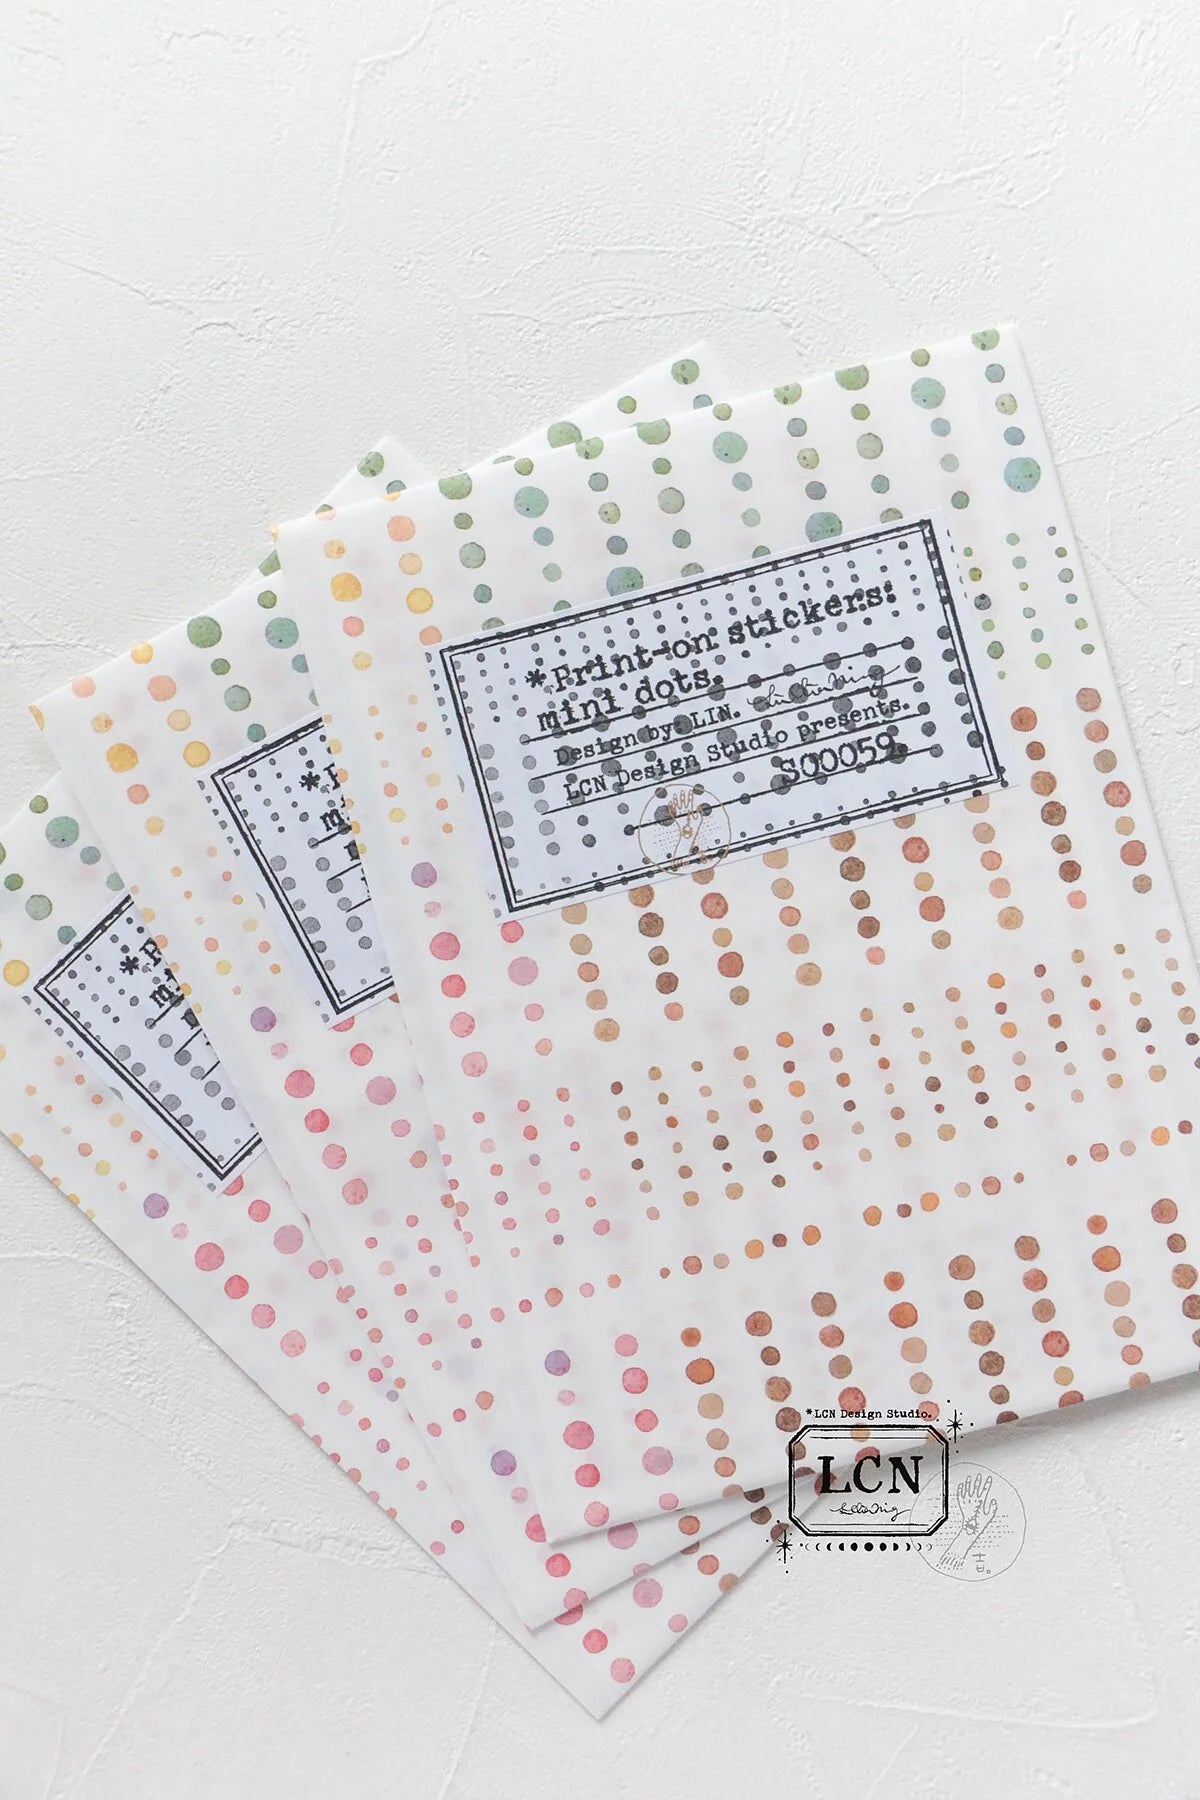 LCN Design Studio: Mini Dots Print On Stickers